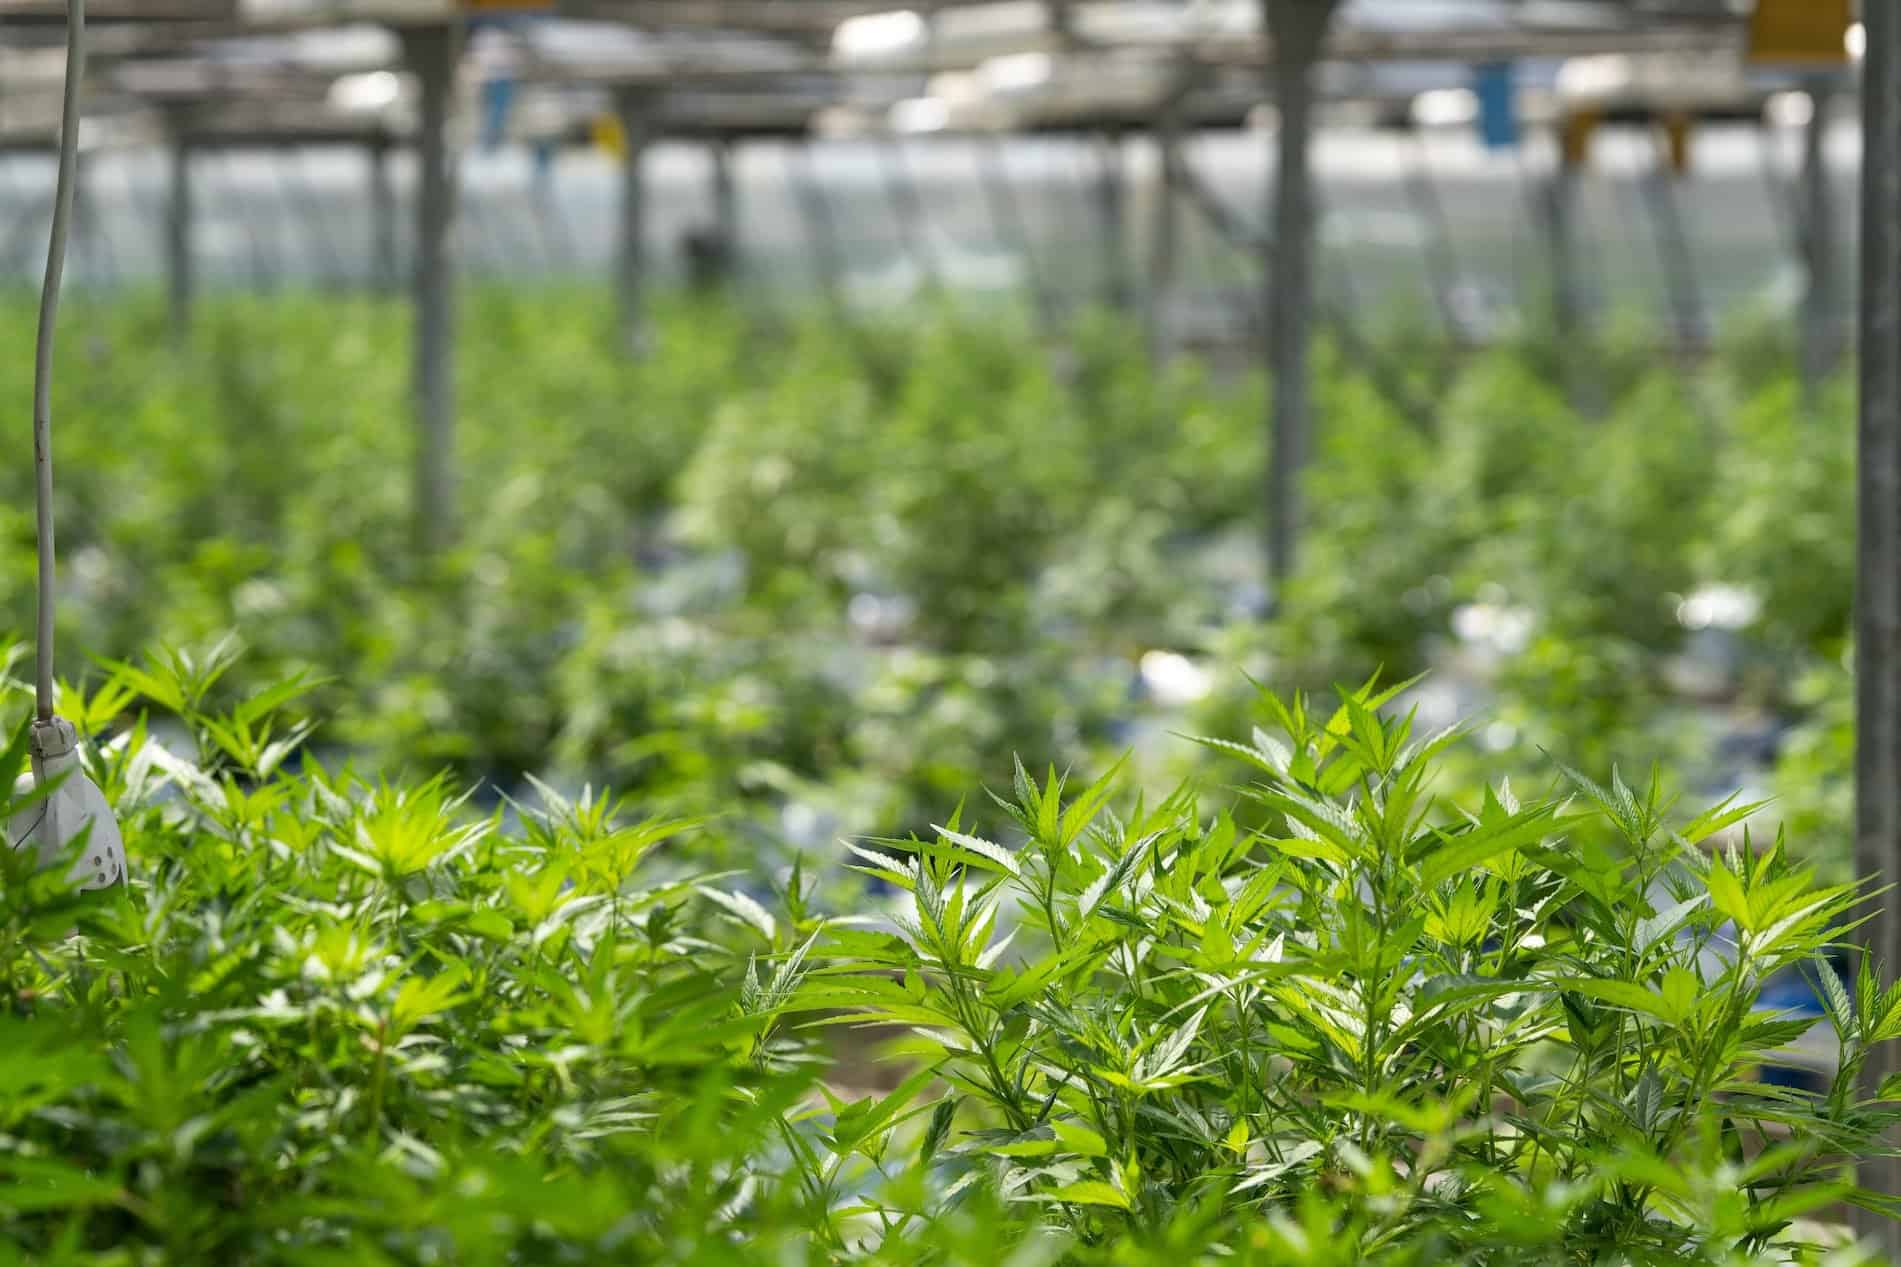 field of cannabis plants in greenhouse, Utah cannabis school